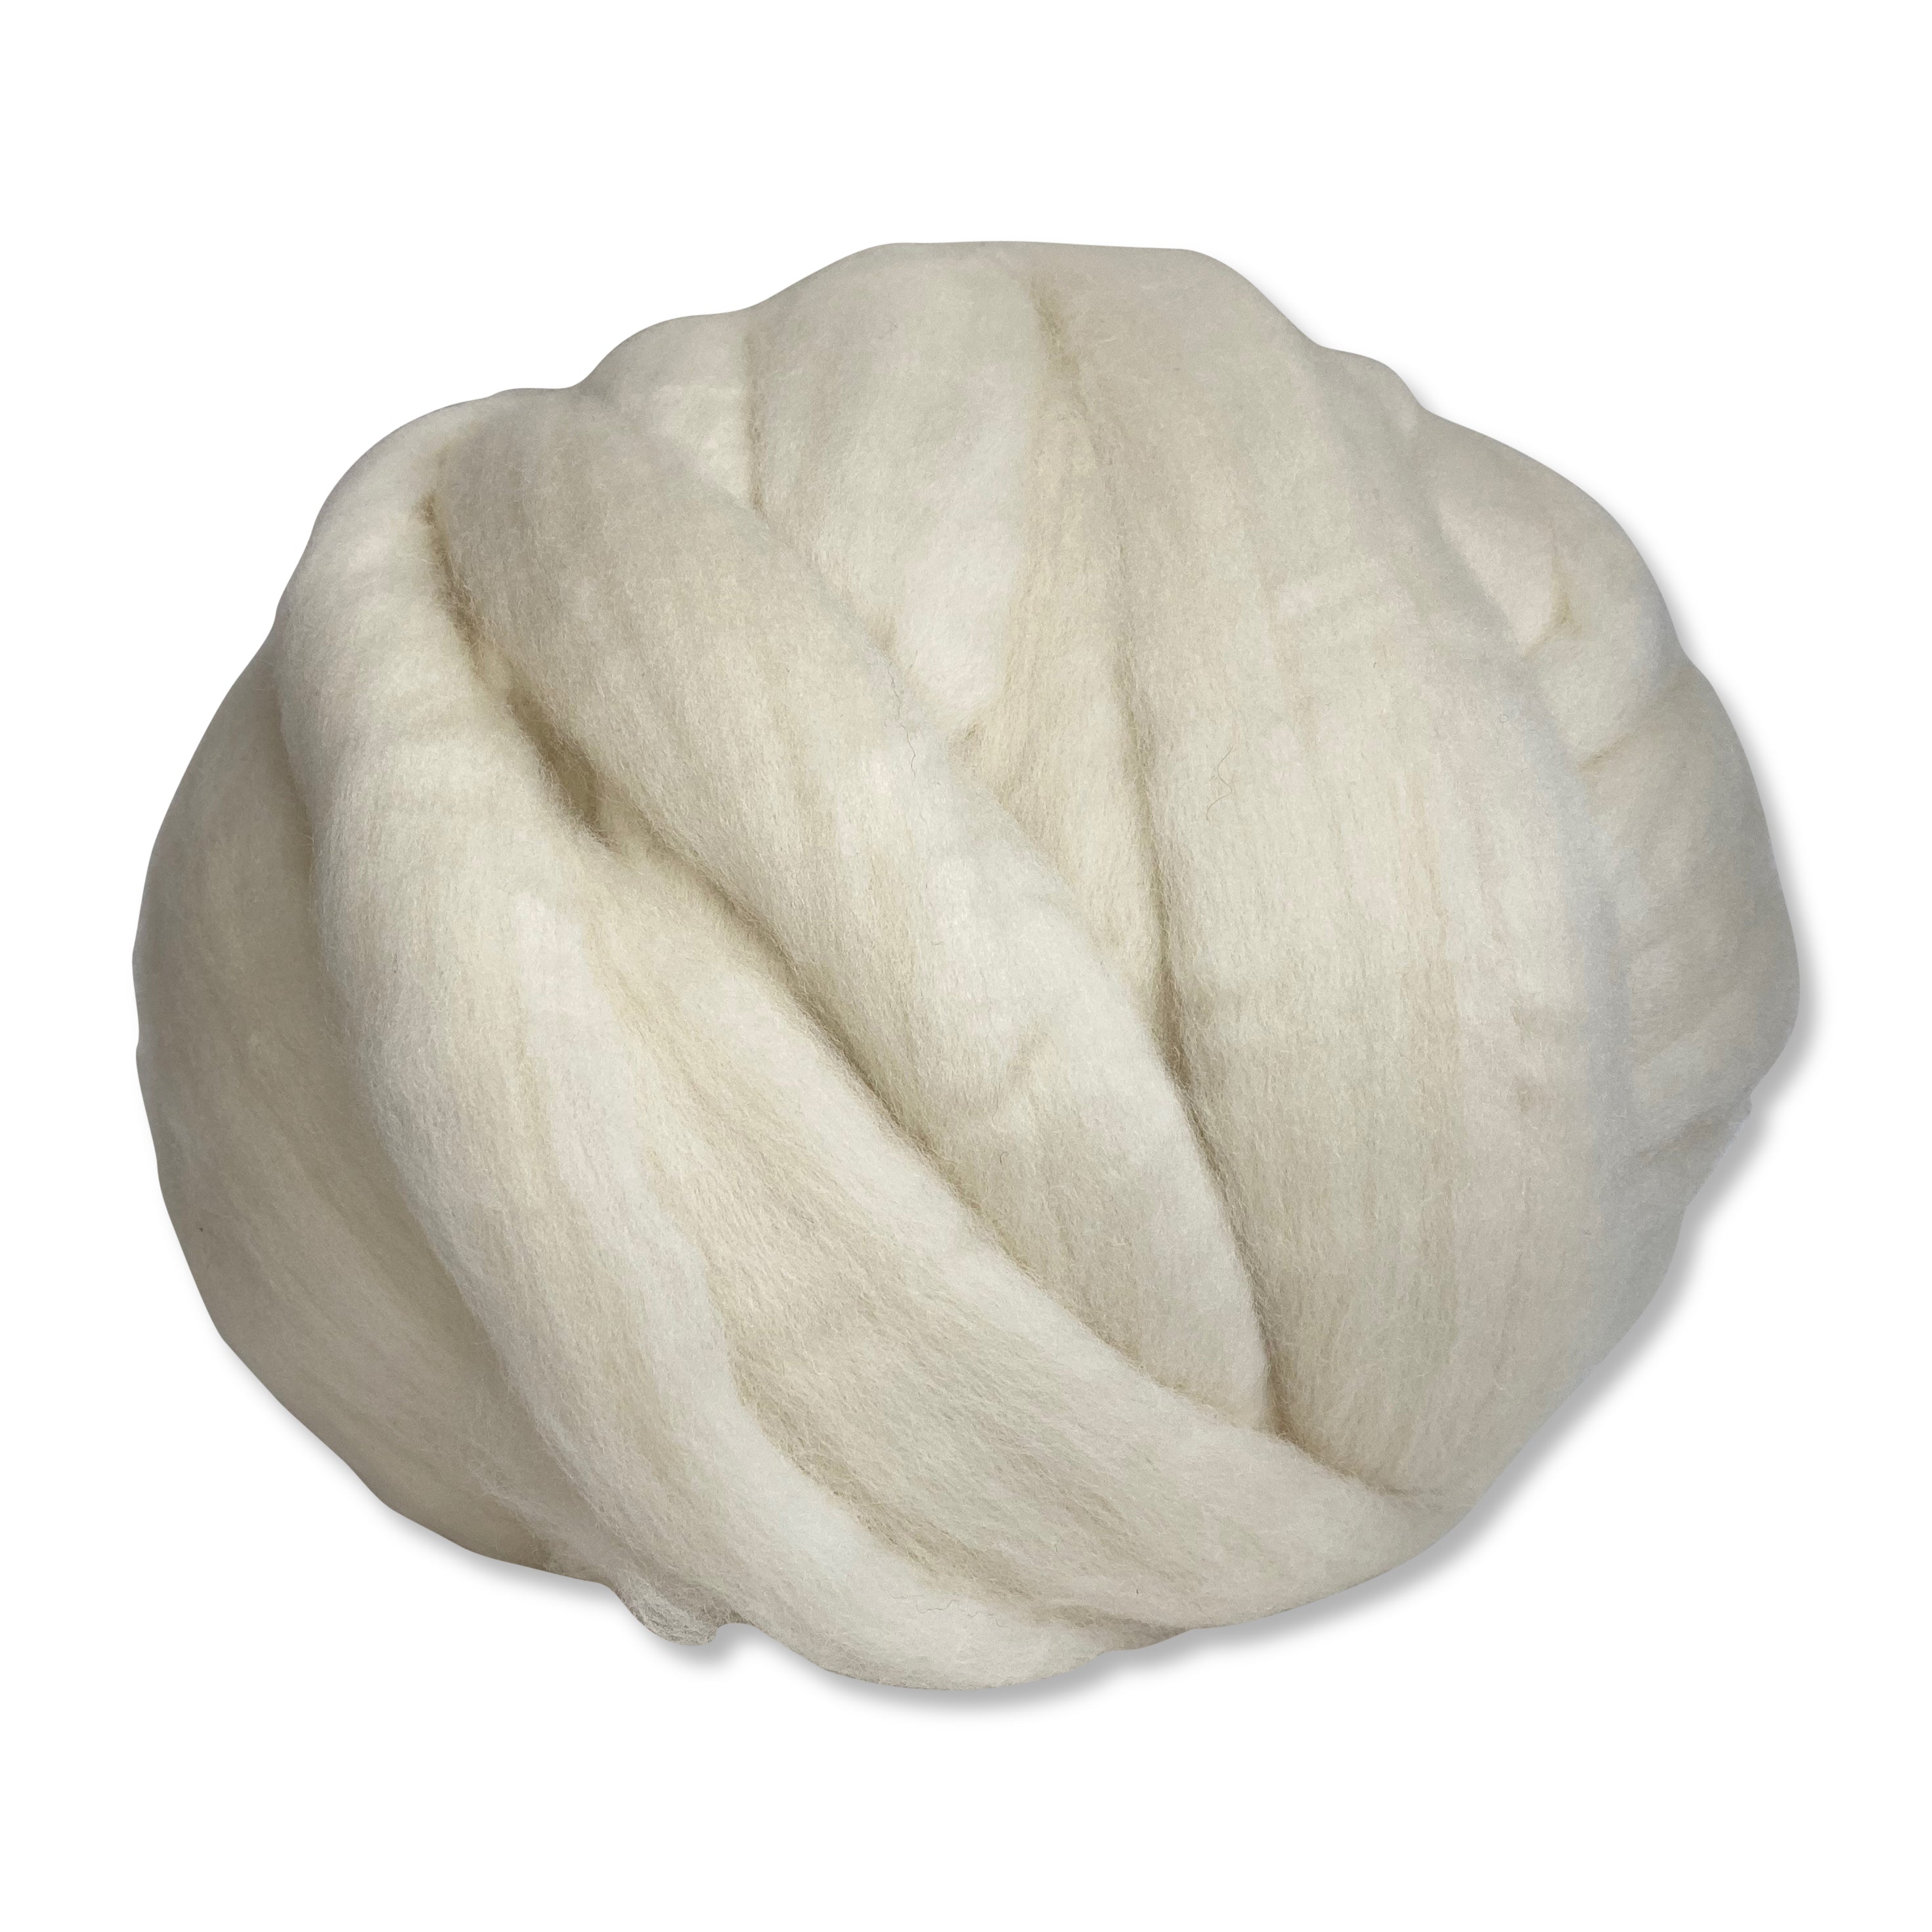  Natural Wool Roving - 8.8 oz Fibre Wool Yarn Roving Needle Felting  Wool Hand Spinning for Beginners Adult Wool Felting Yarn Supplies DIY Craft  Materials - Mocha Brown : Arts, Crafts & Sewing